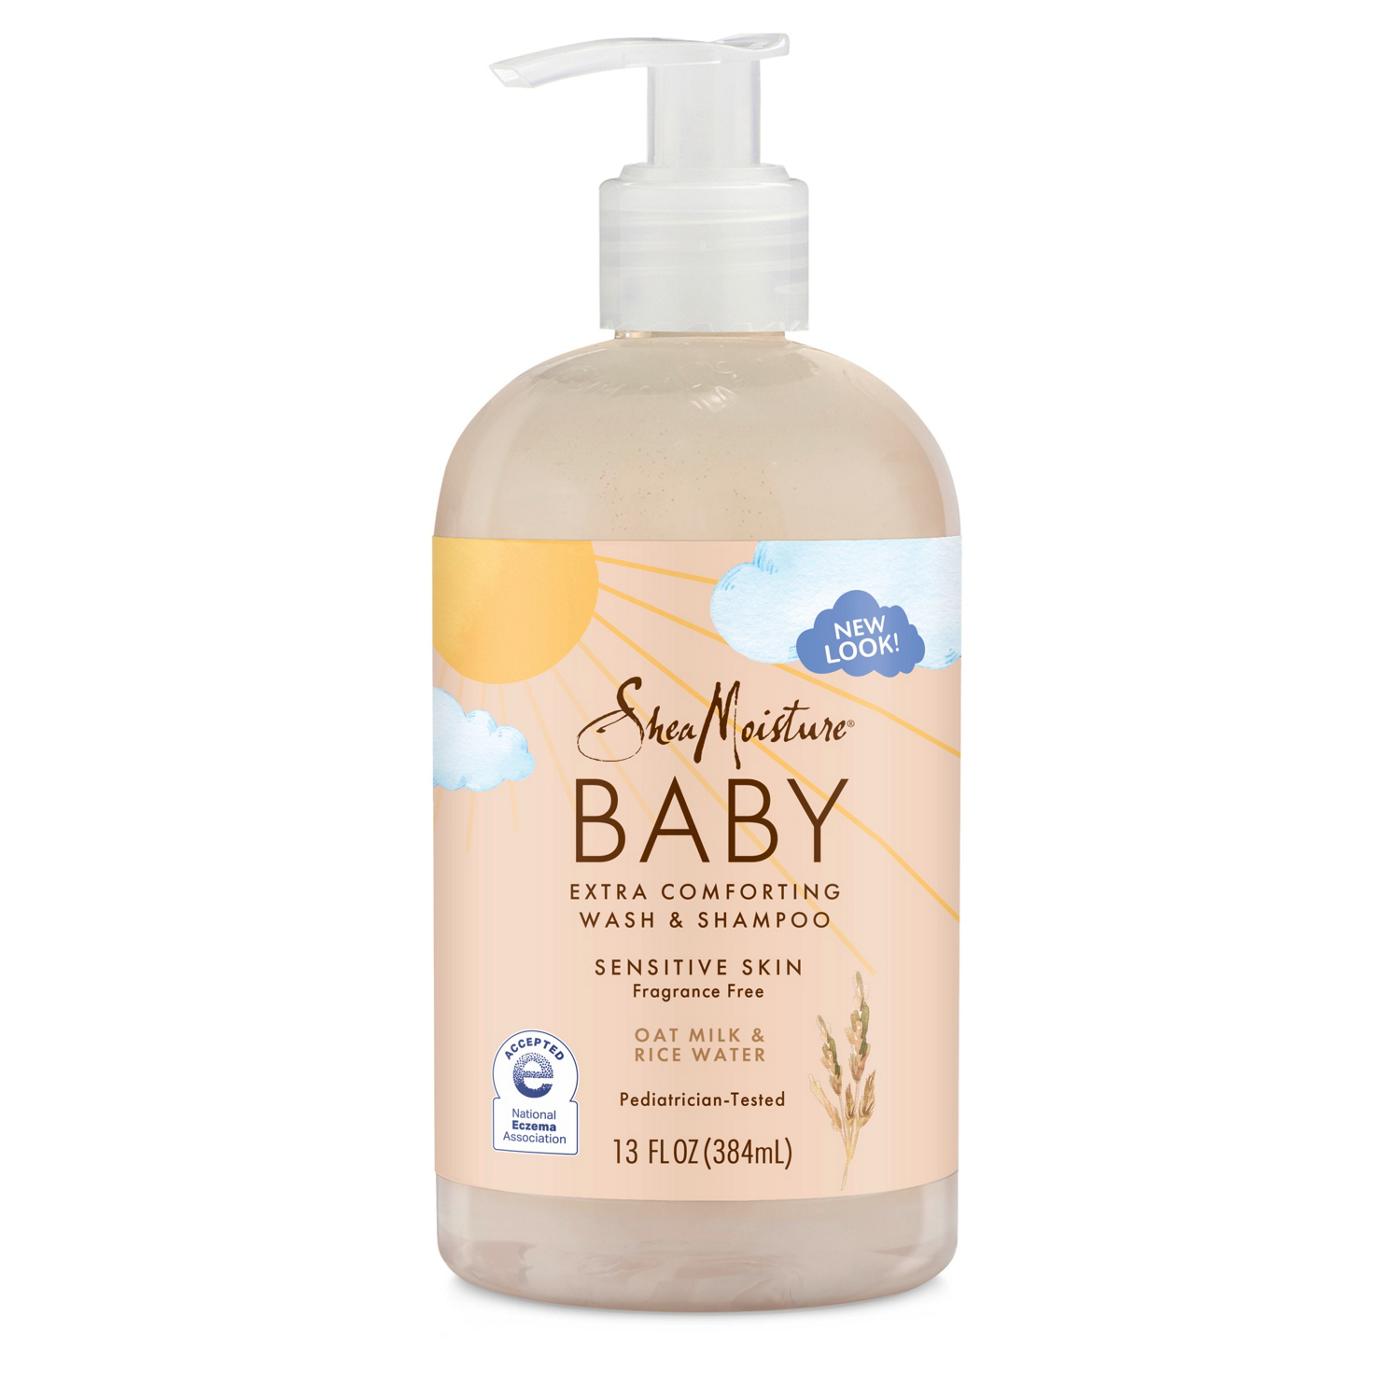 SheaMoisture Baby Wash + Shampoo - Oat Milk & Rice Water; image 1 of 7